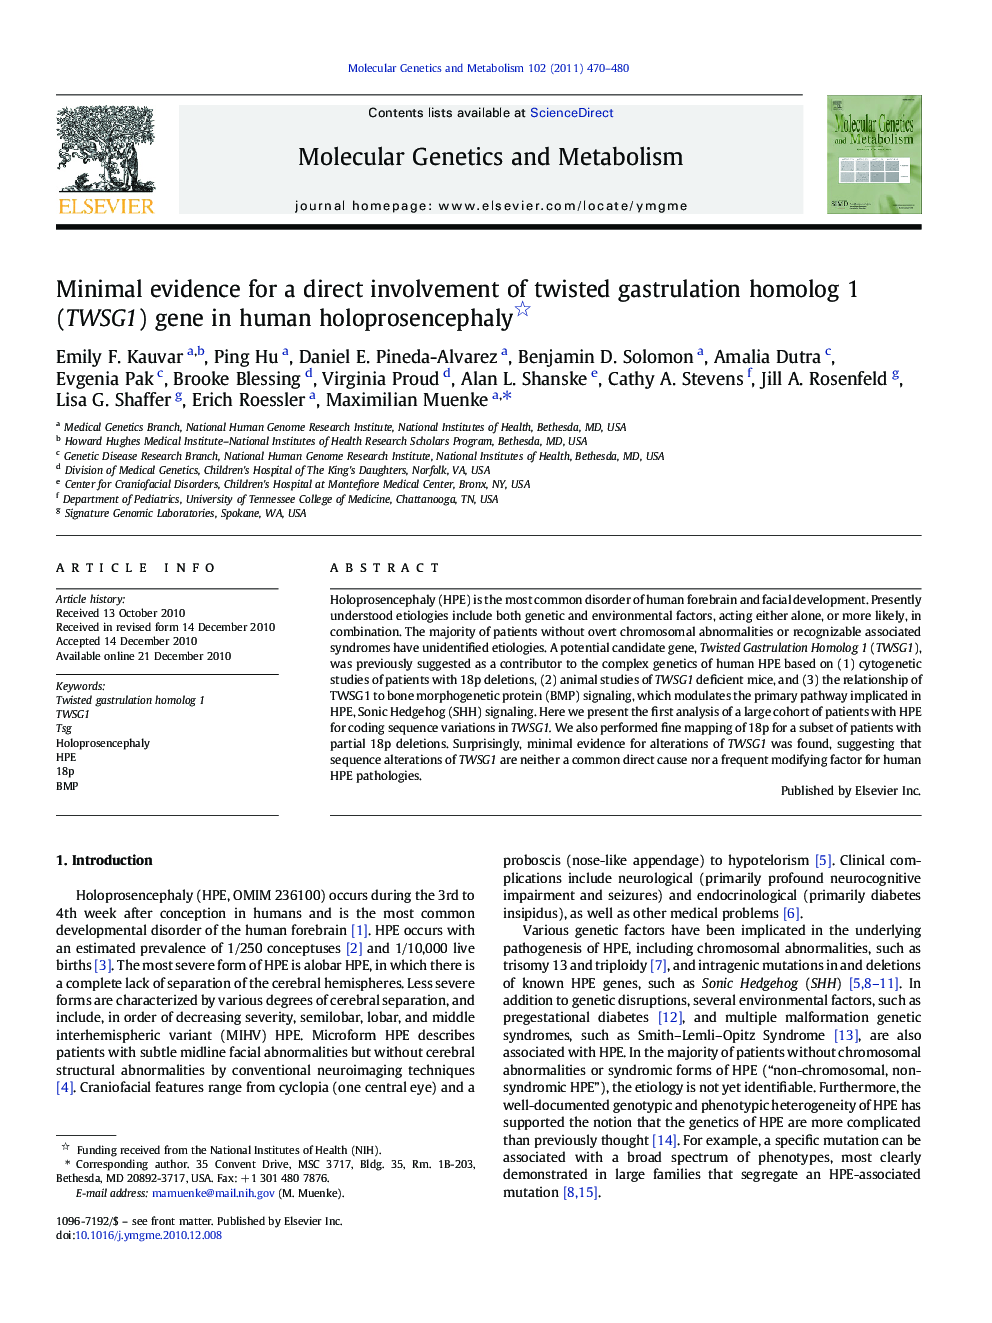 Minimal evidence for a direct involvement of twisted gastrulation homolog 1 (TWSG1) gene in human holoprosencephaly 